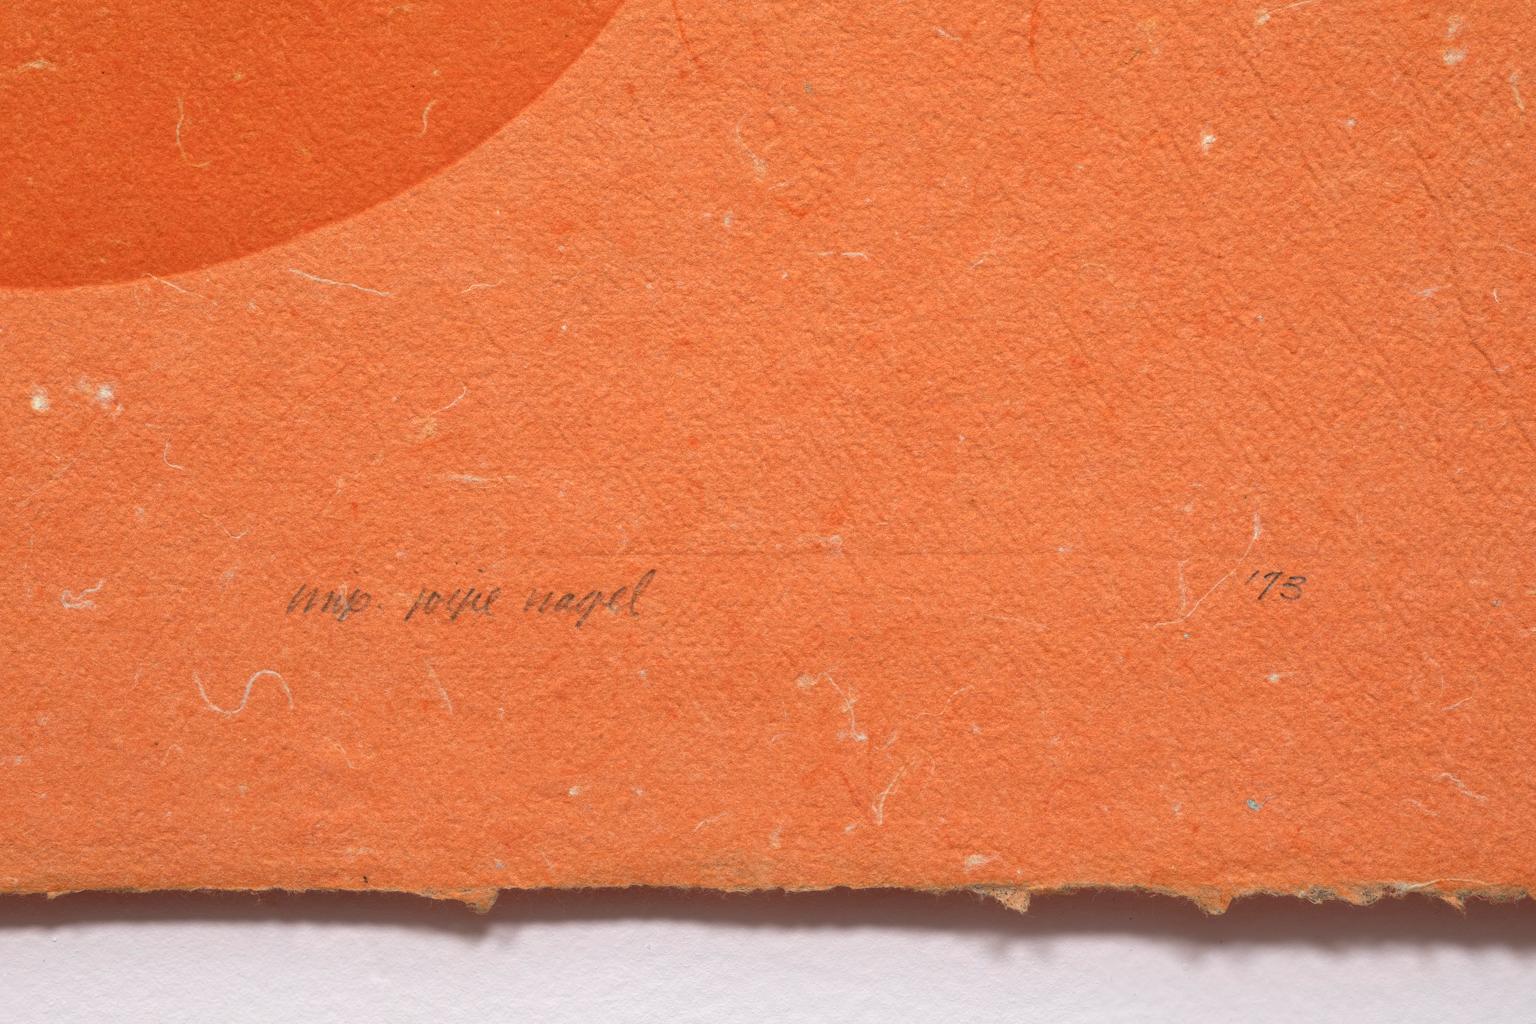 Joyce T. Nagel Druck „Orange“ AP 1 Künstler Proof Handgefertigtes Papier Signiert datiert, datiert im Angebot 2